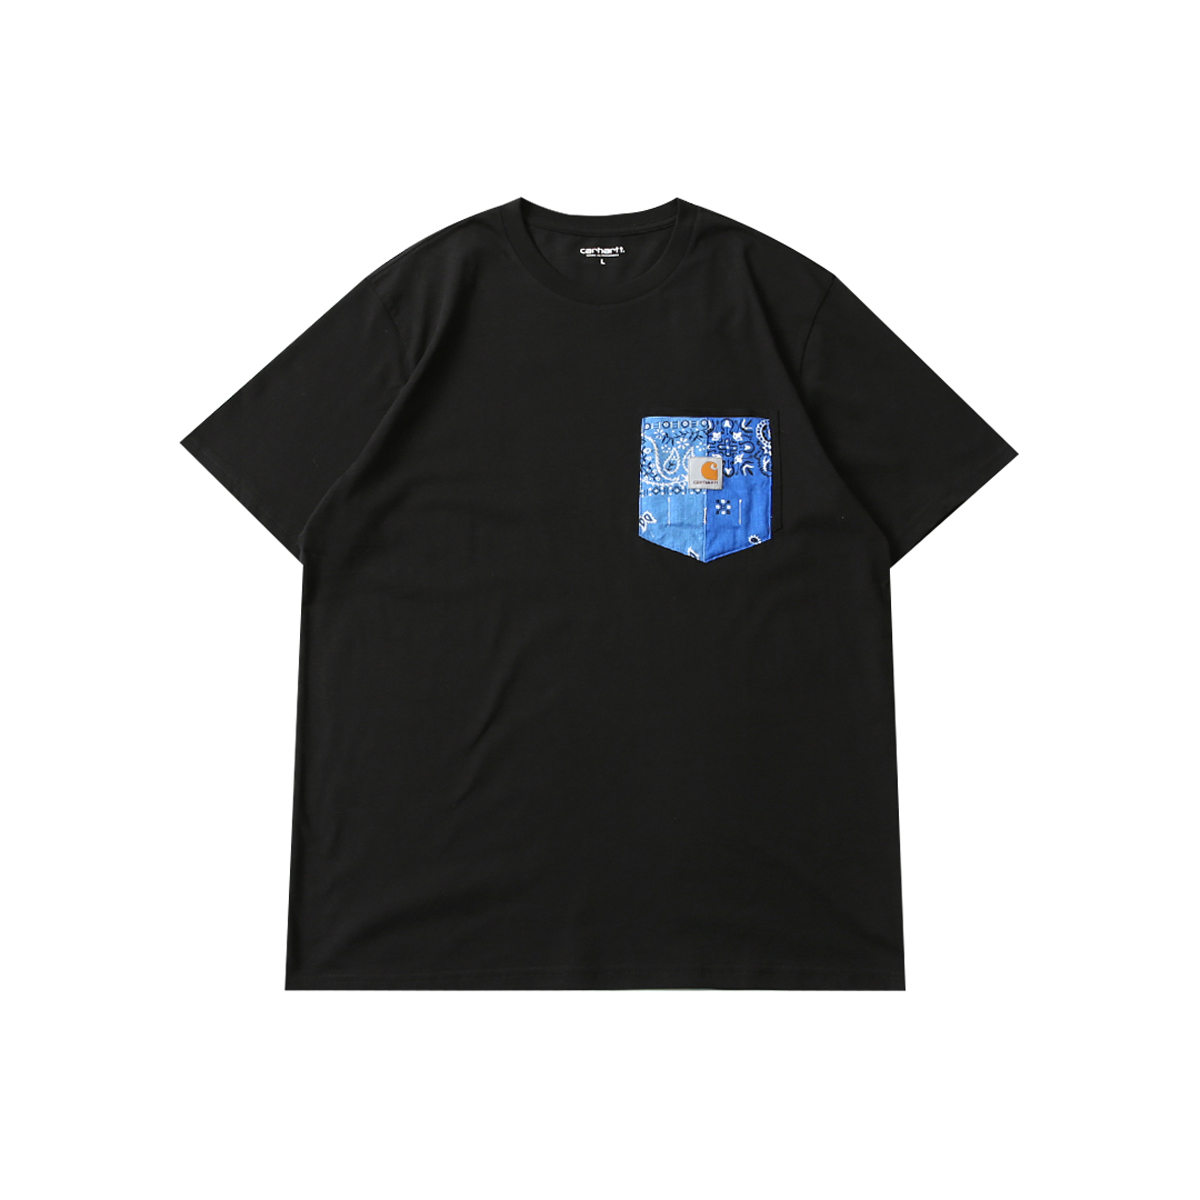 MIYAGIHIDETAKA x Carhartt WIP Japan Bandana Shirt Collab